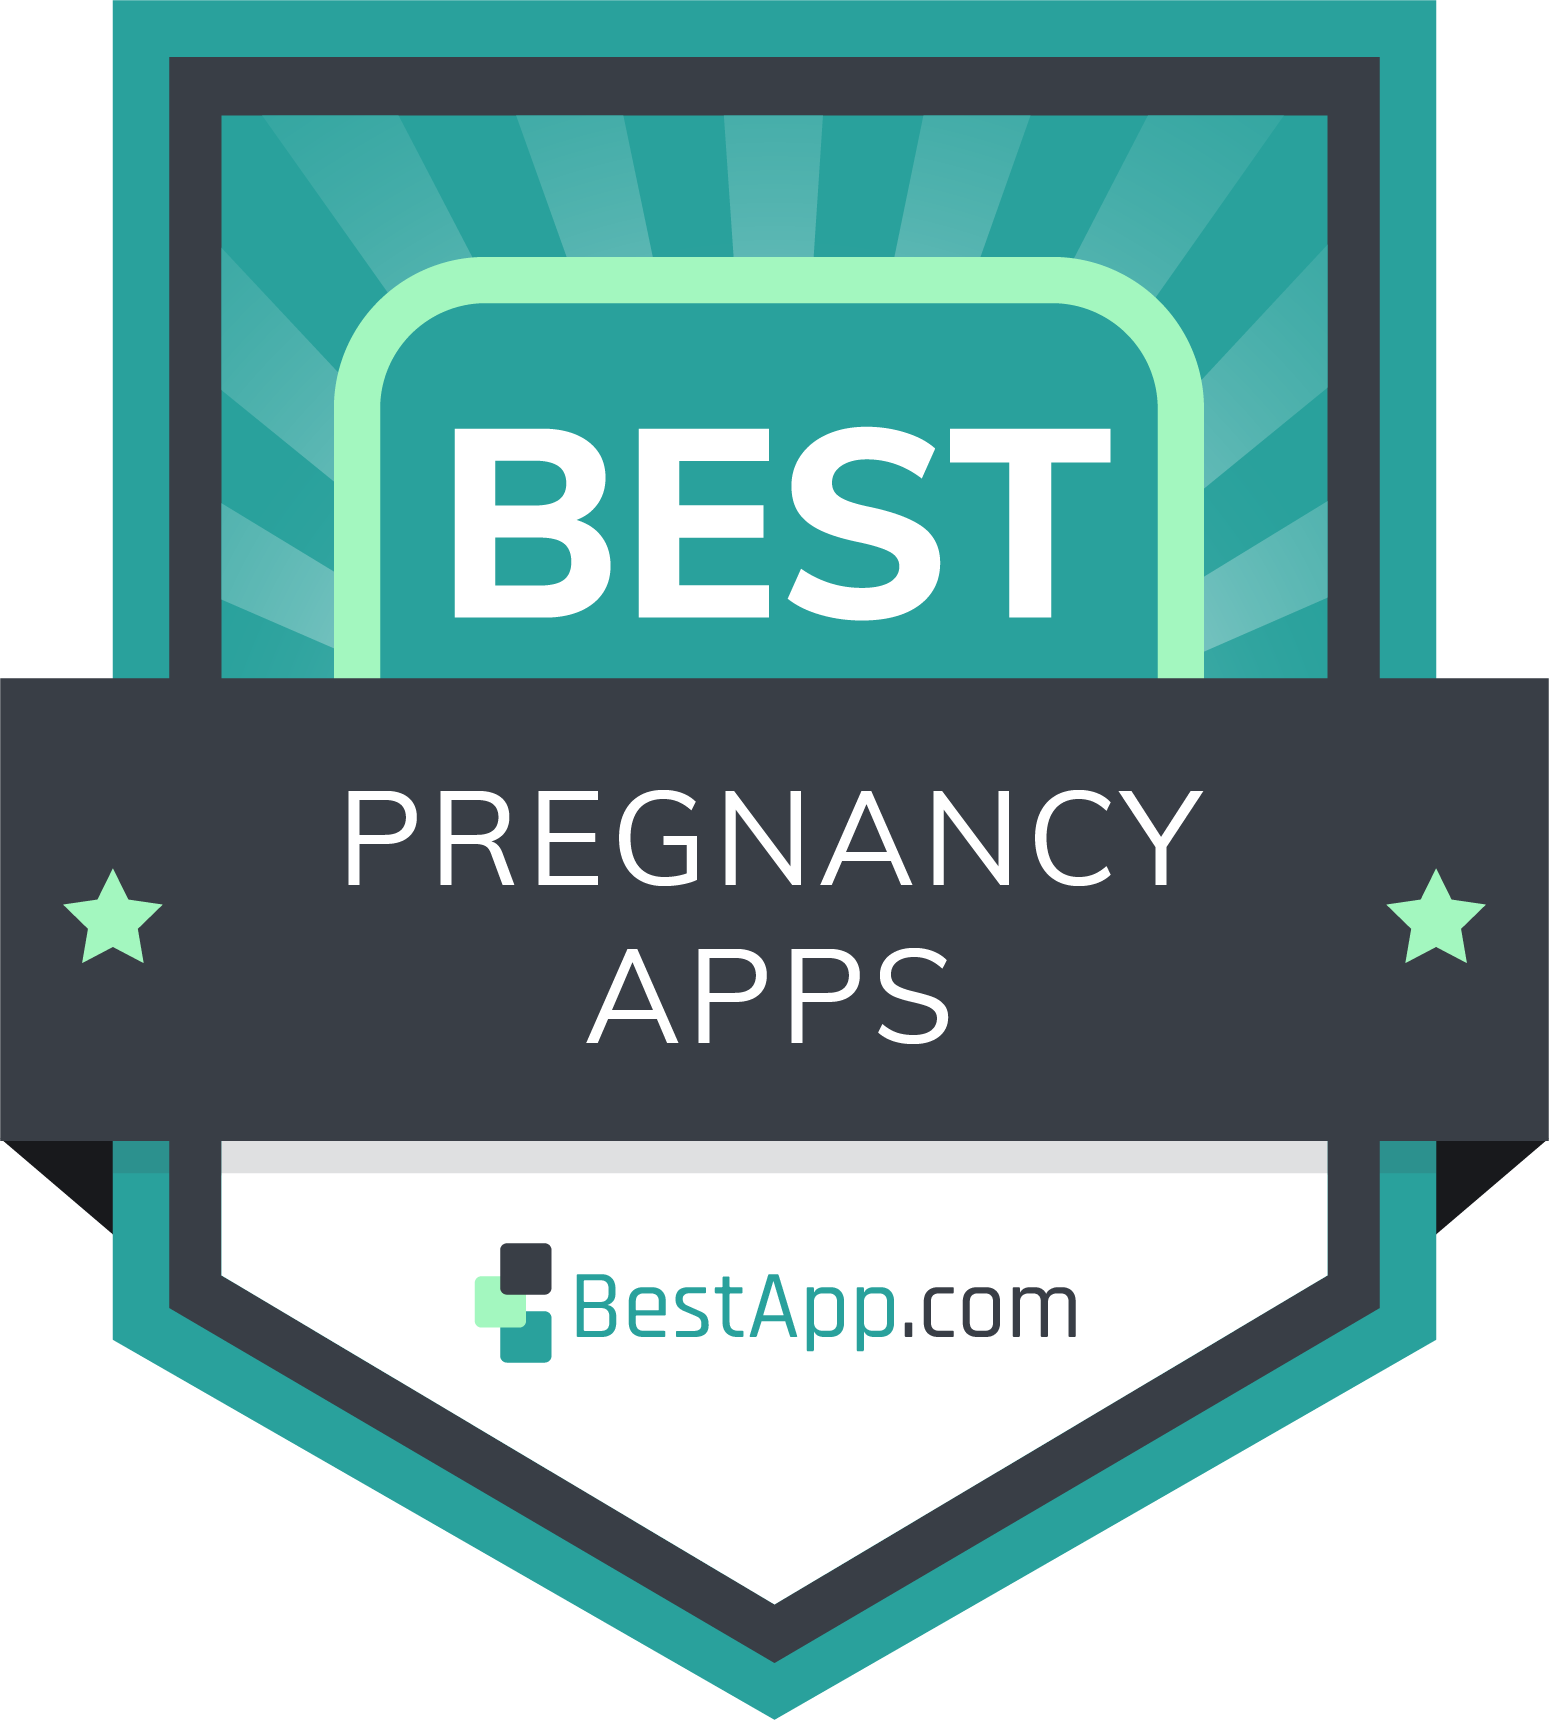 Best Pregnancy Apps Badge